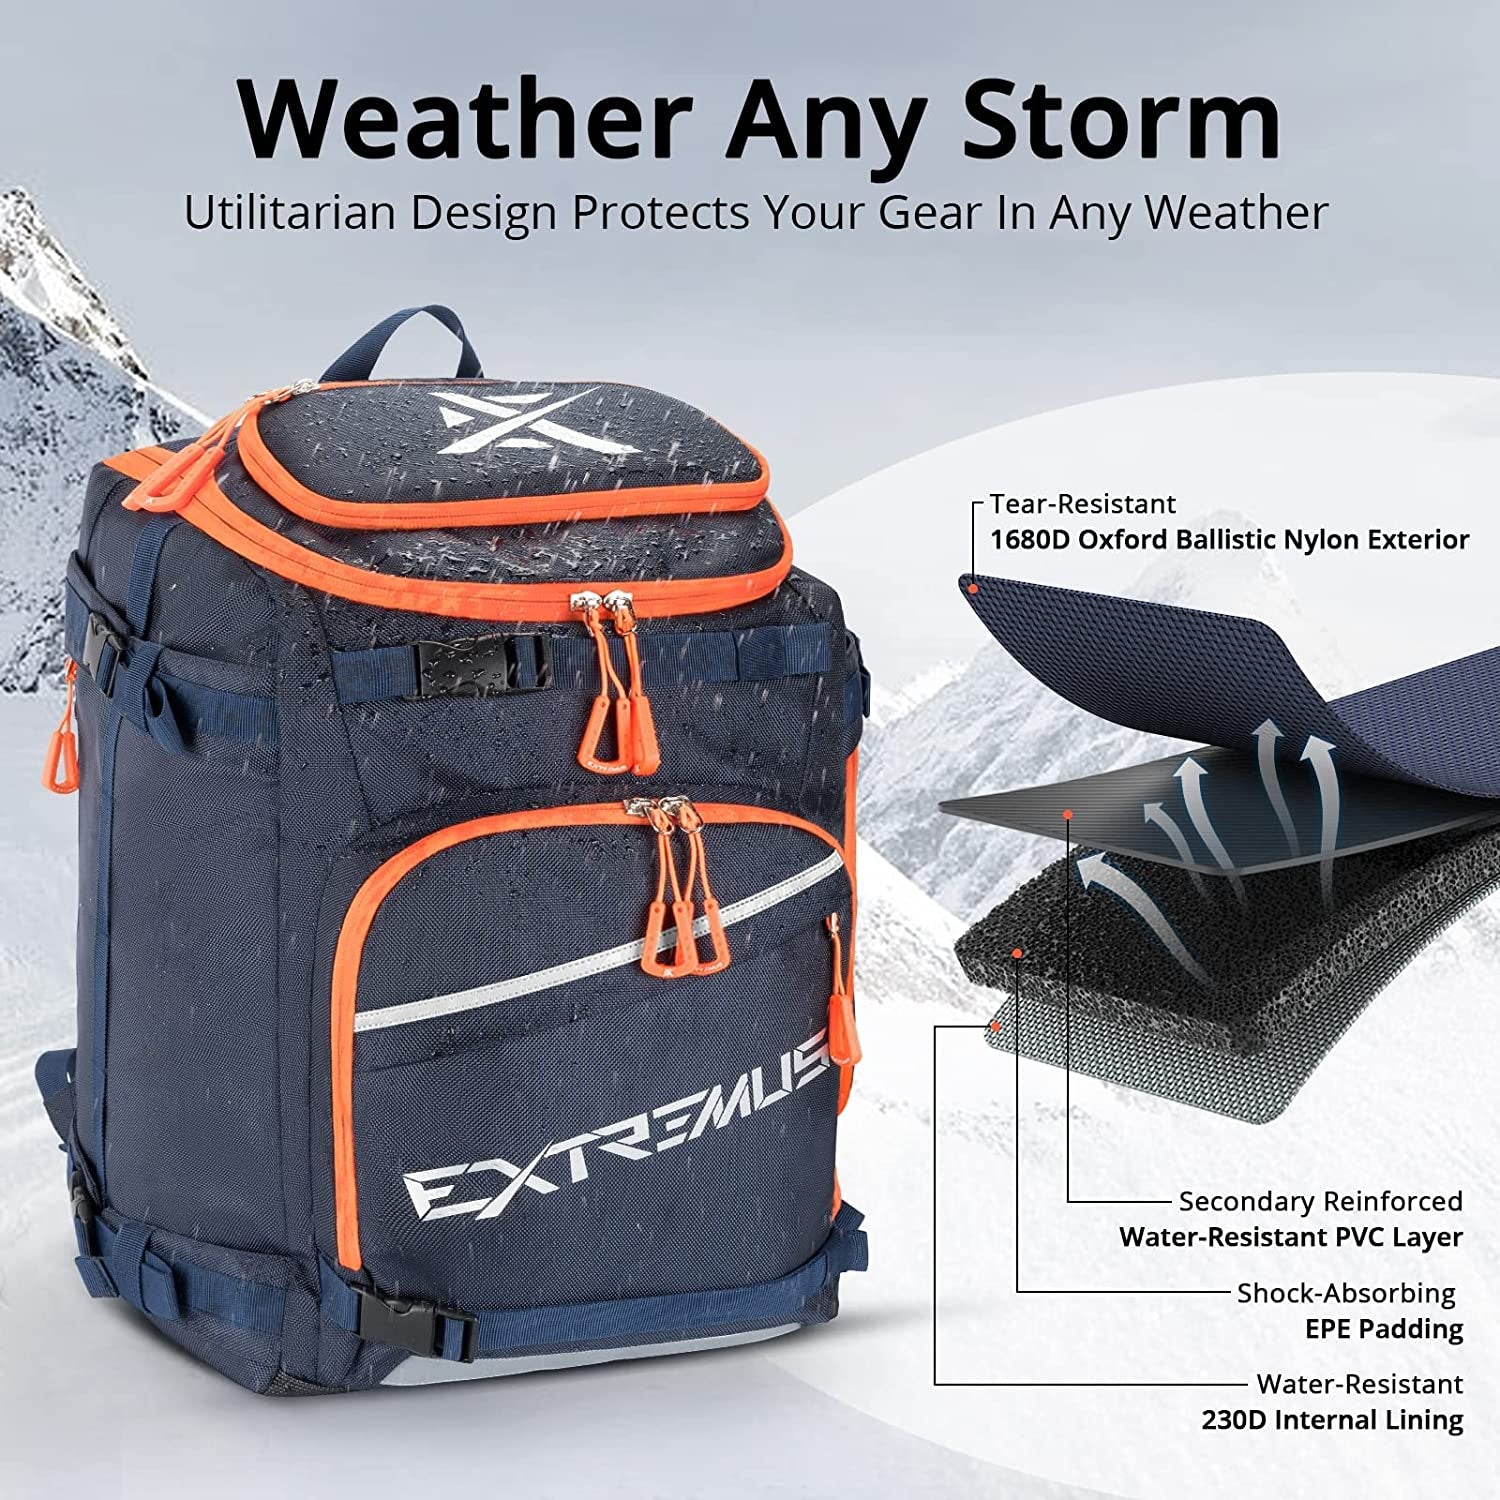 Extremus Ski Boot Bag, 70L Waterproof Snowboard Backpack,Large Capacity Ski Travel Bag Luggage for Ski Boots, Ski Helmet, Goggles, Gloves, Apparel & Skiing Gear Accessories